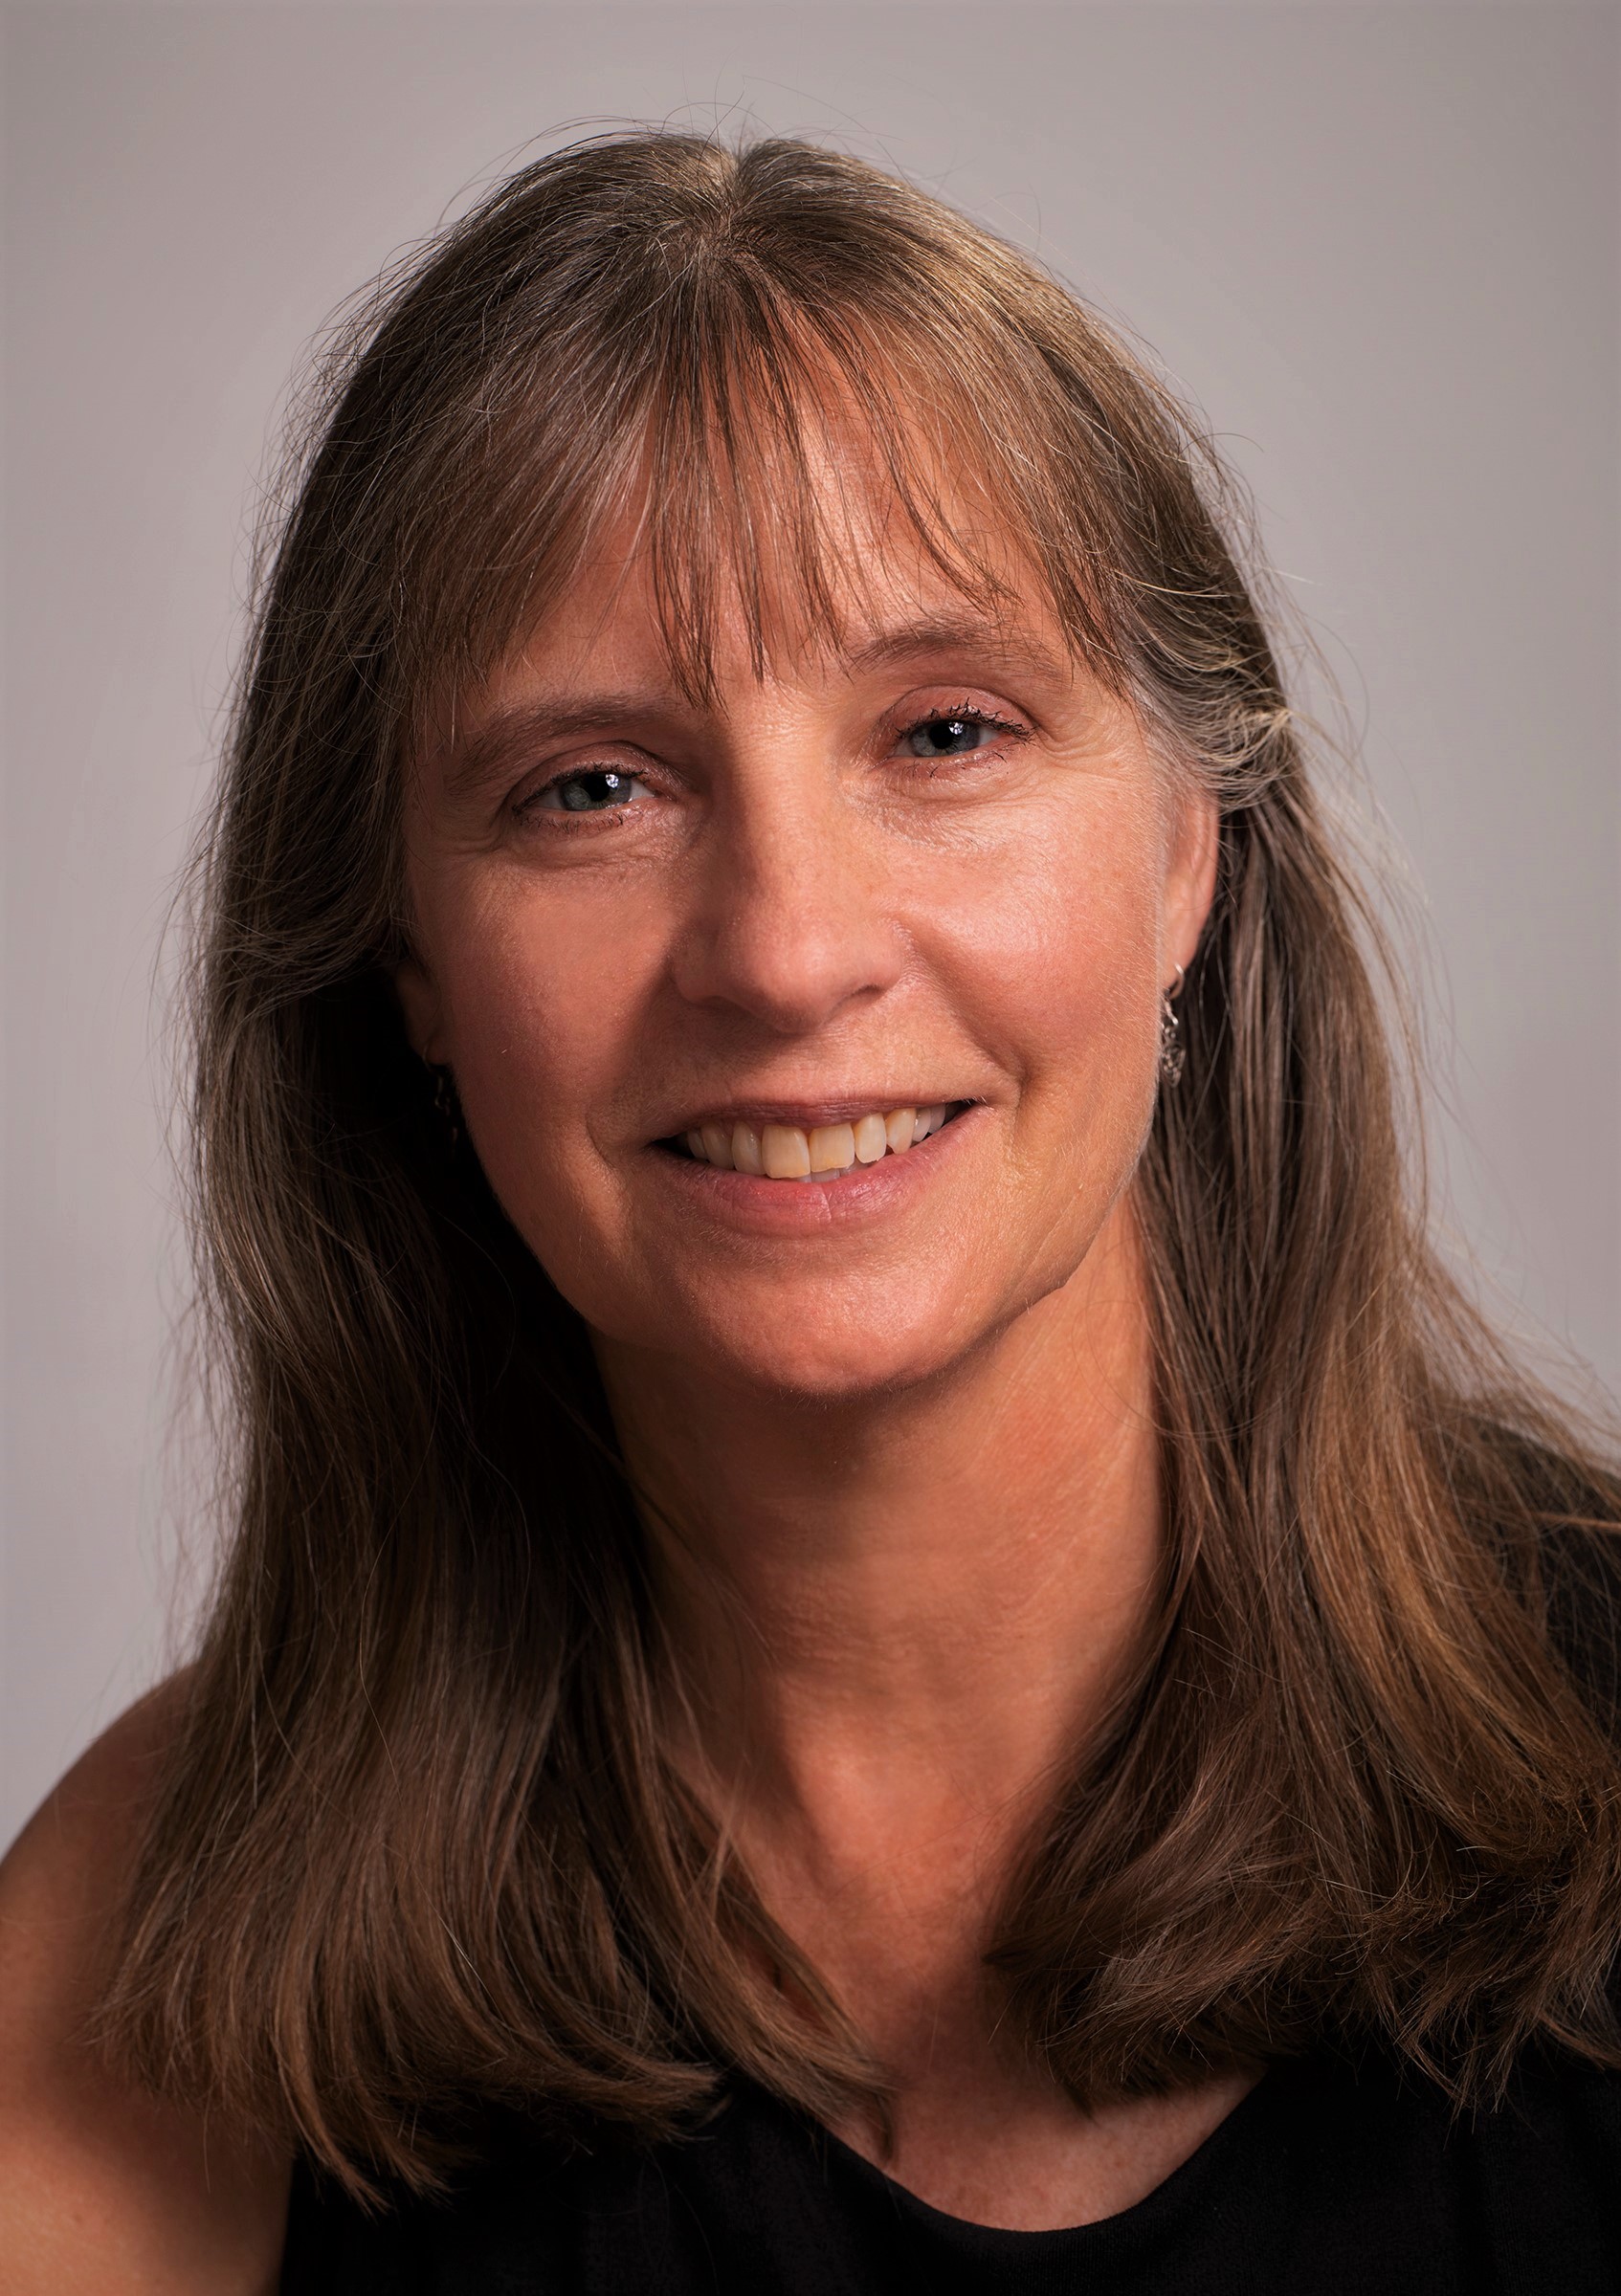 Local Author Teresa Janssen